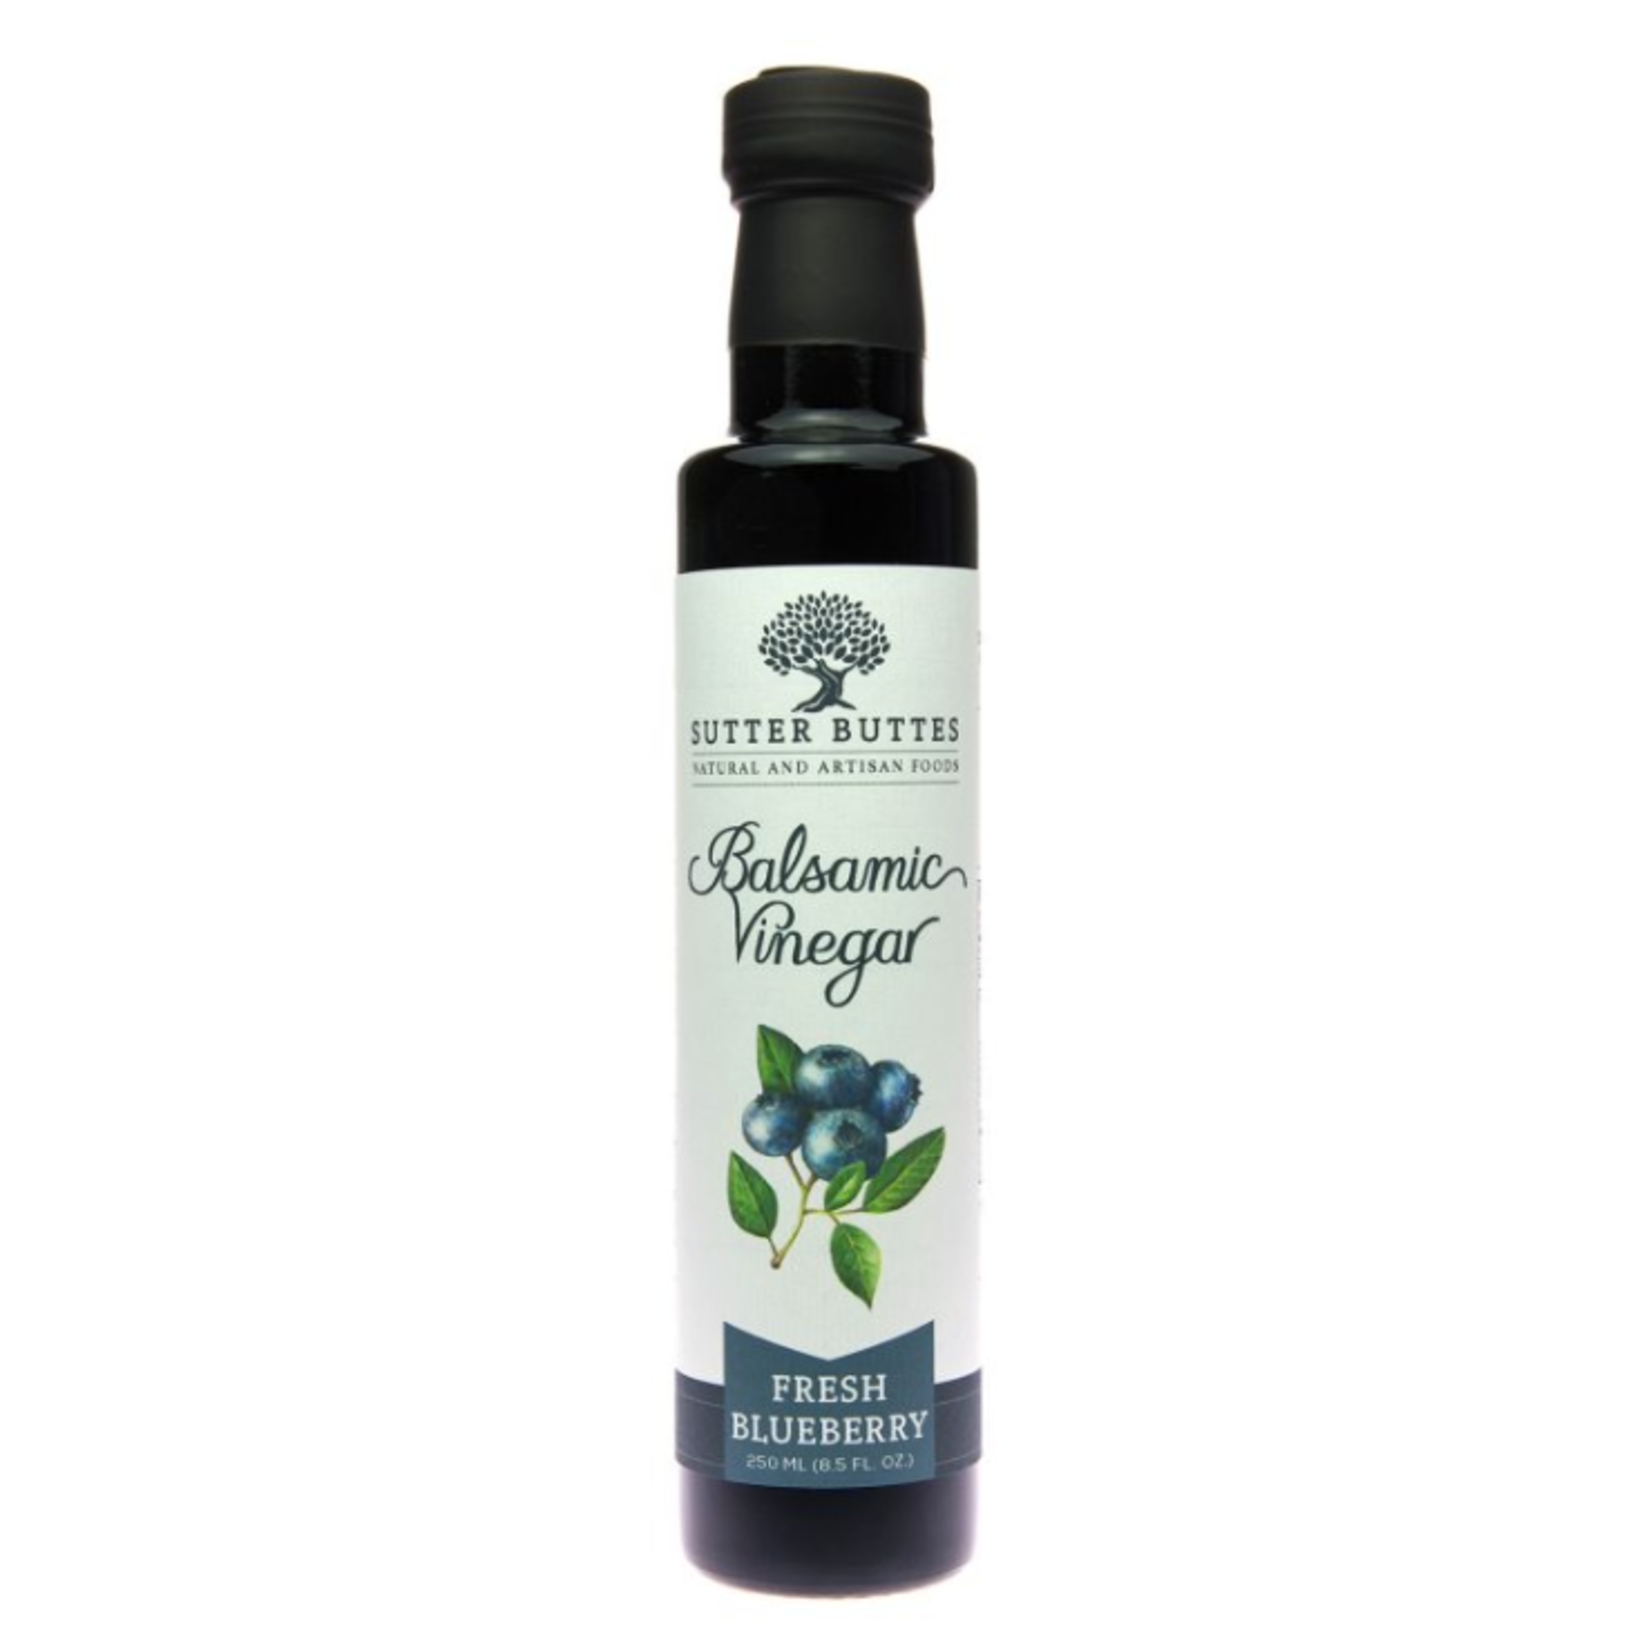 Sutter Buttes Blueberry - Fruit Fusion Dark Balsamic Vinegar, 250 ml